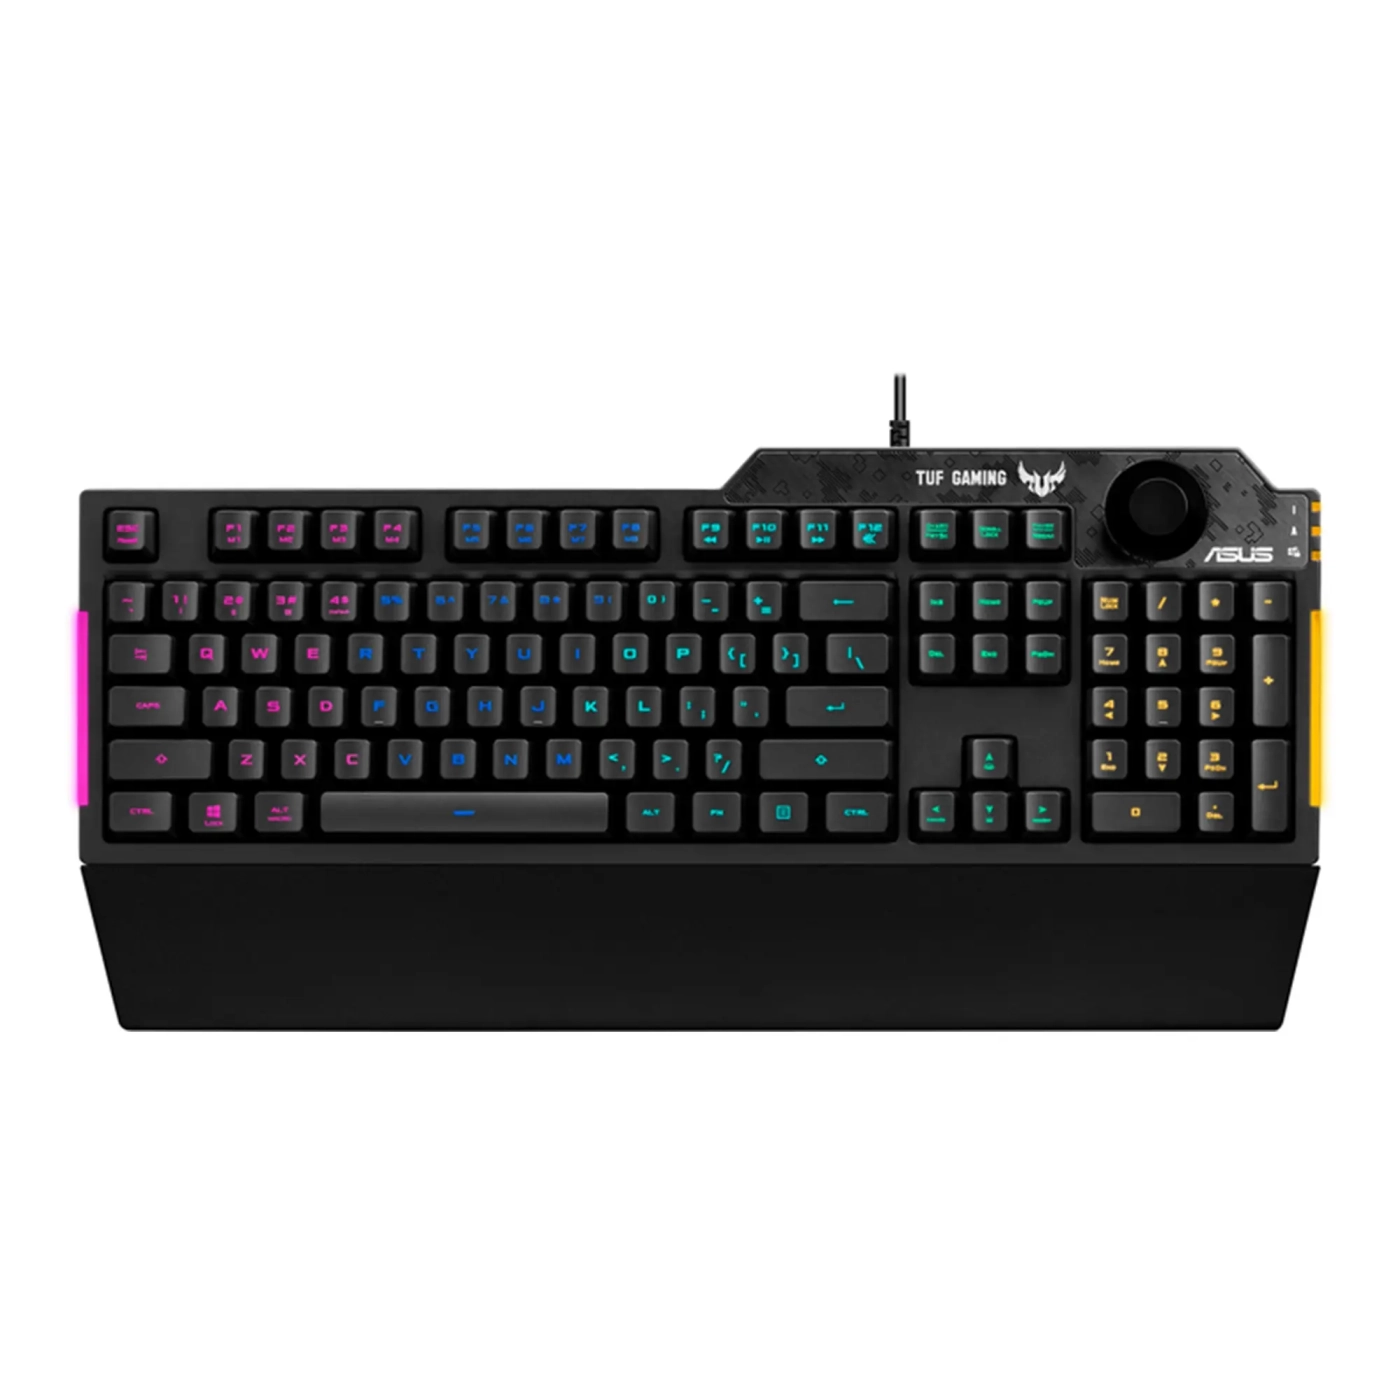 Купить Клавиатура ASUS TUF Gaming RGB Black (90MP01X0-BKMA00) - фото 1